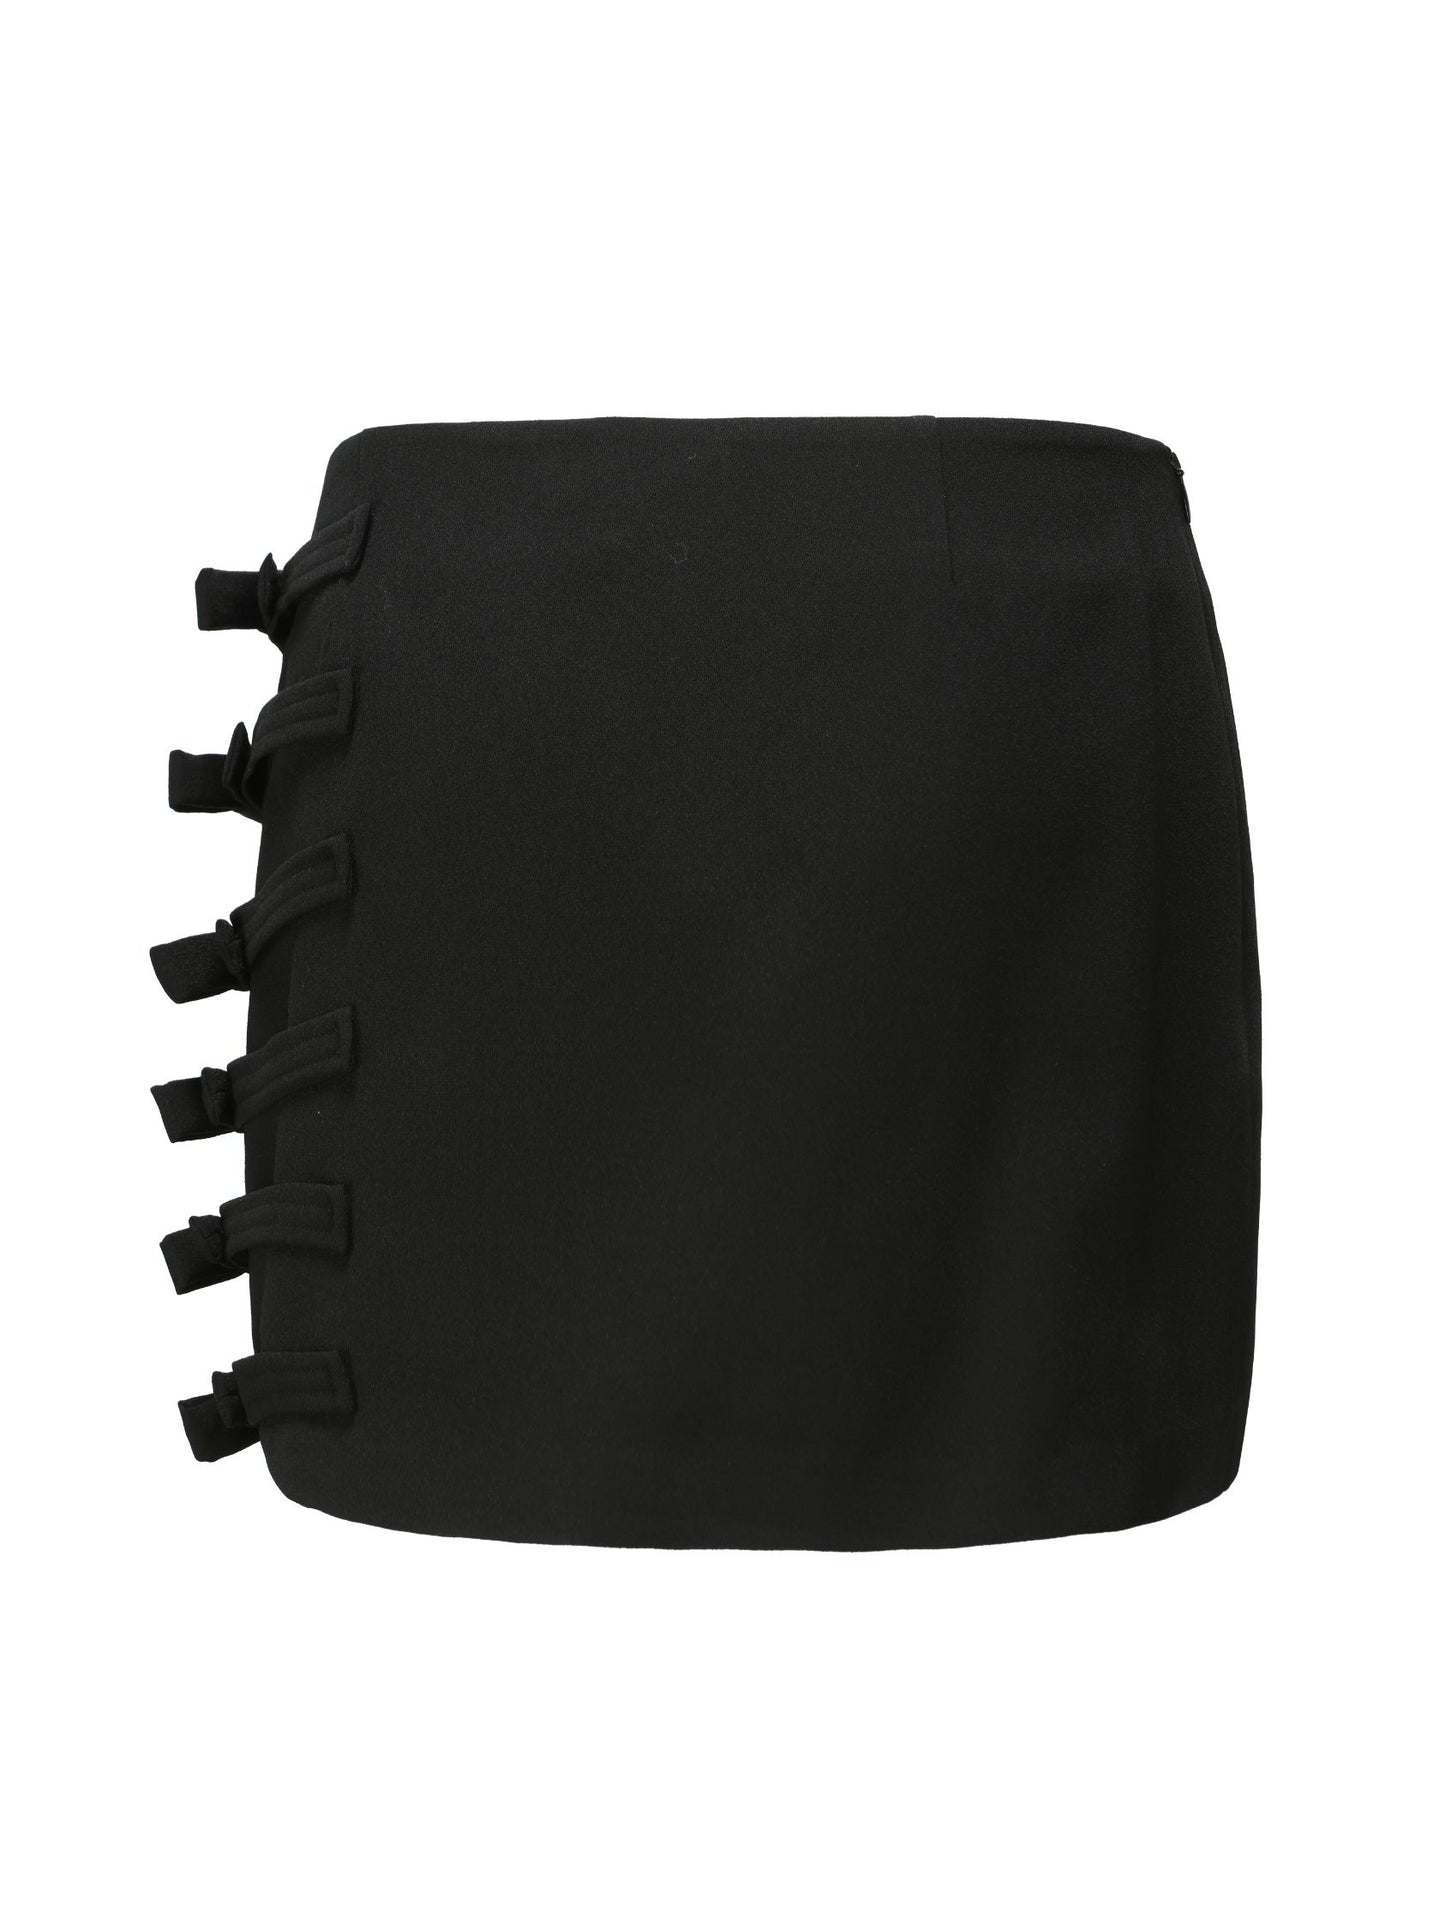 Jaina Bow Skirt (Black) (Final Sale)